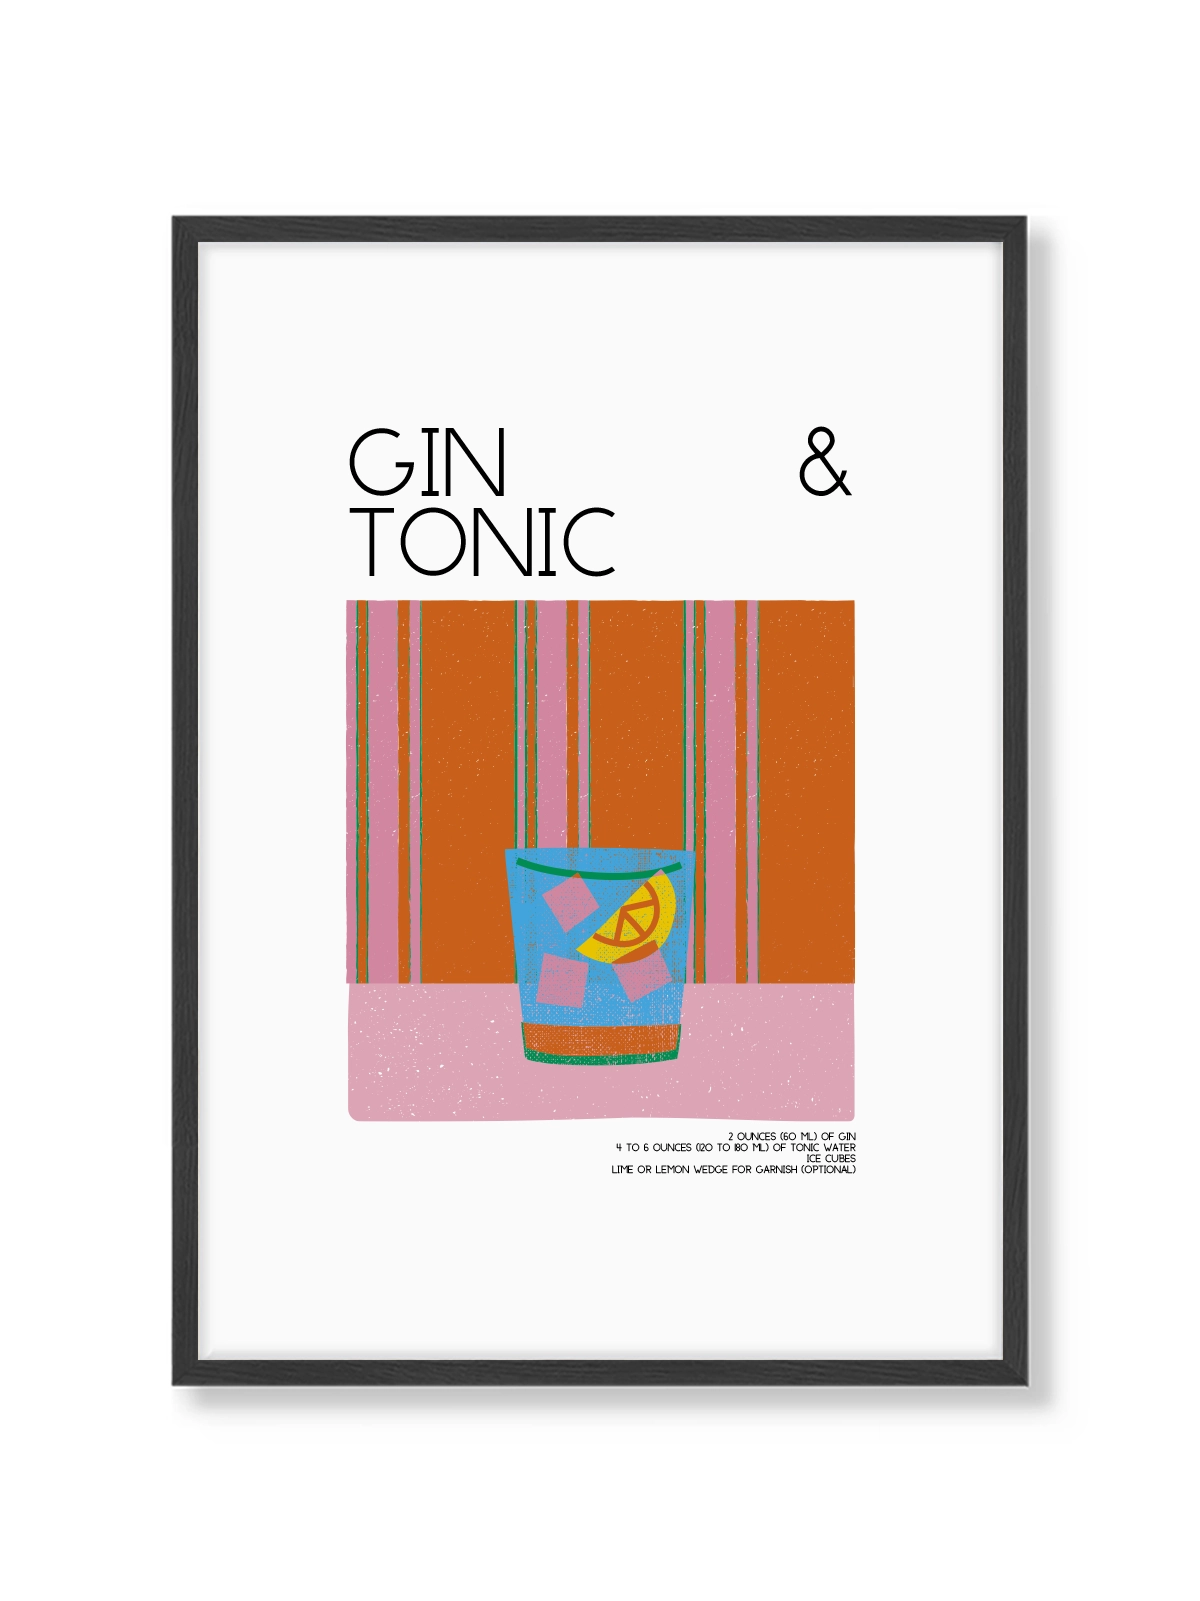 Gin tonic